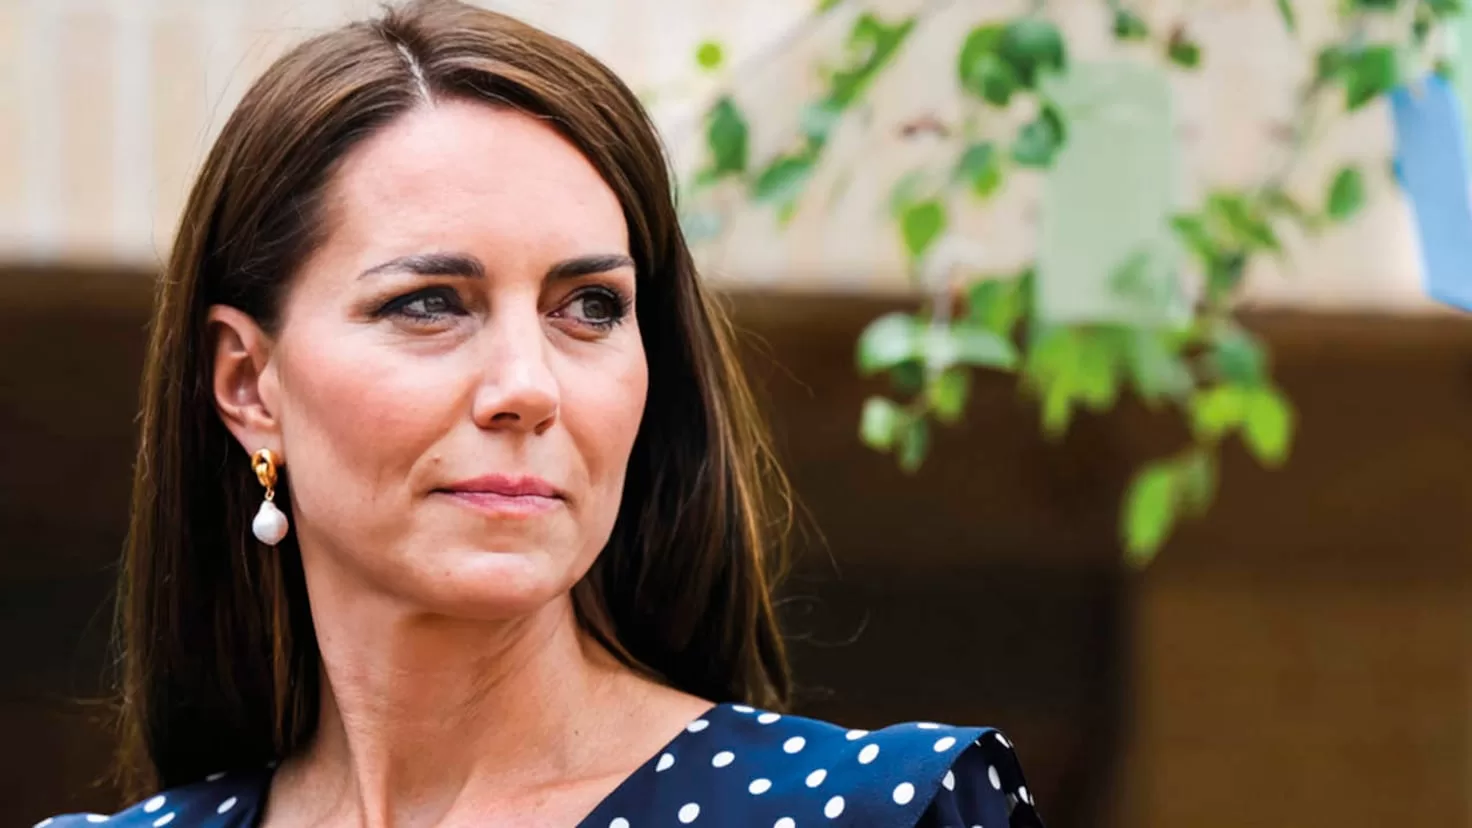 KateGate: Kensington Palace sets a date for Kate Middleton's soft return
